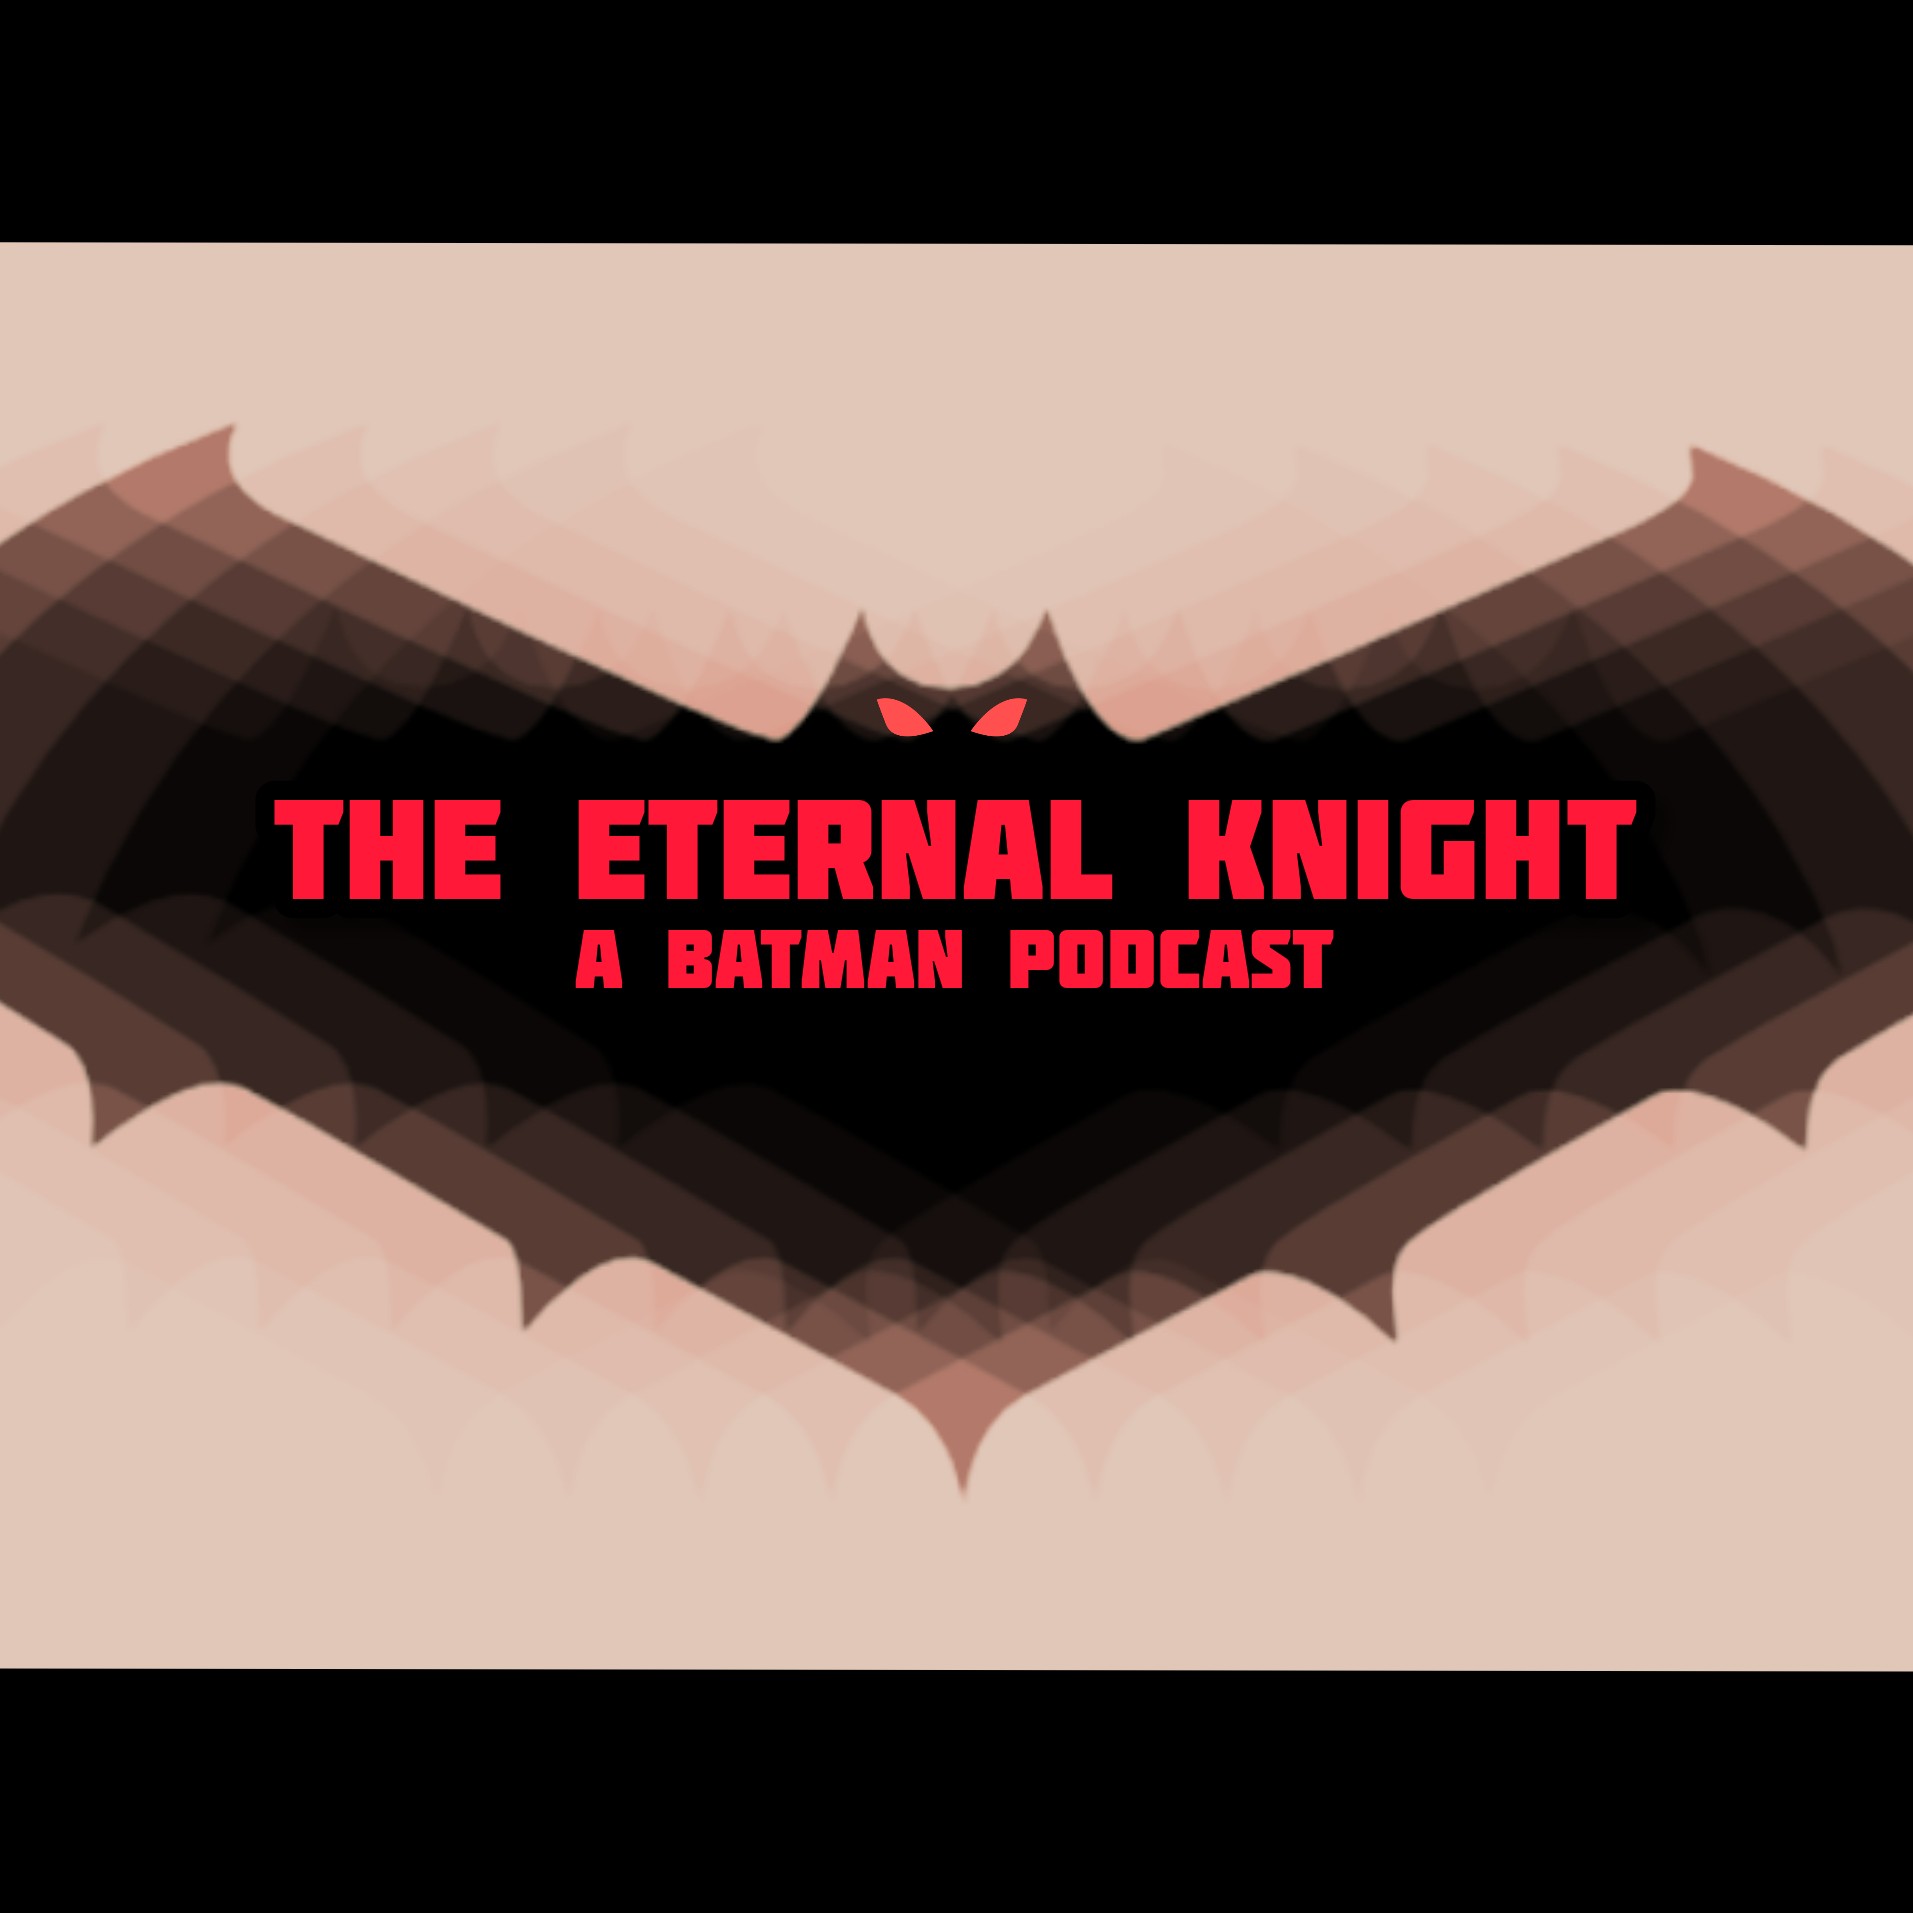 The Eternal Knight